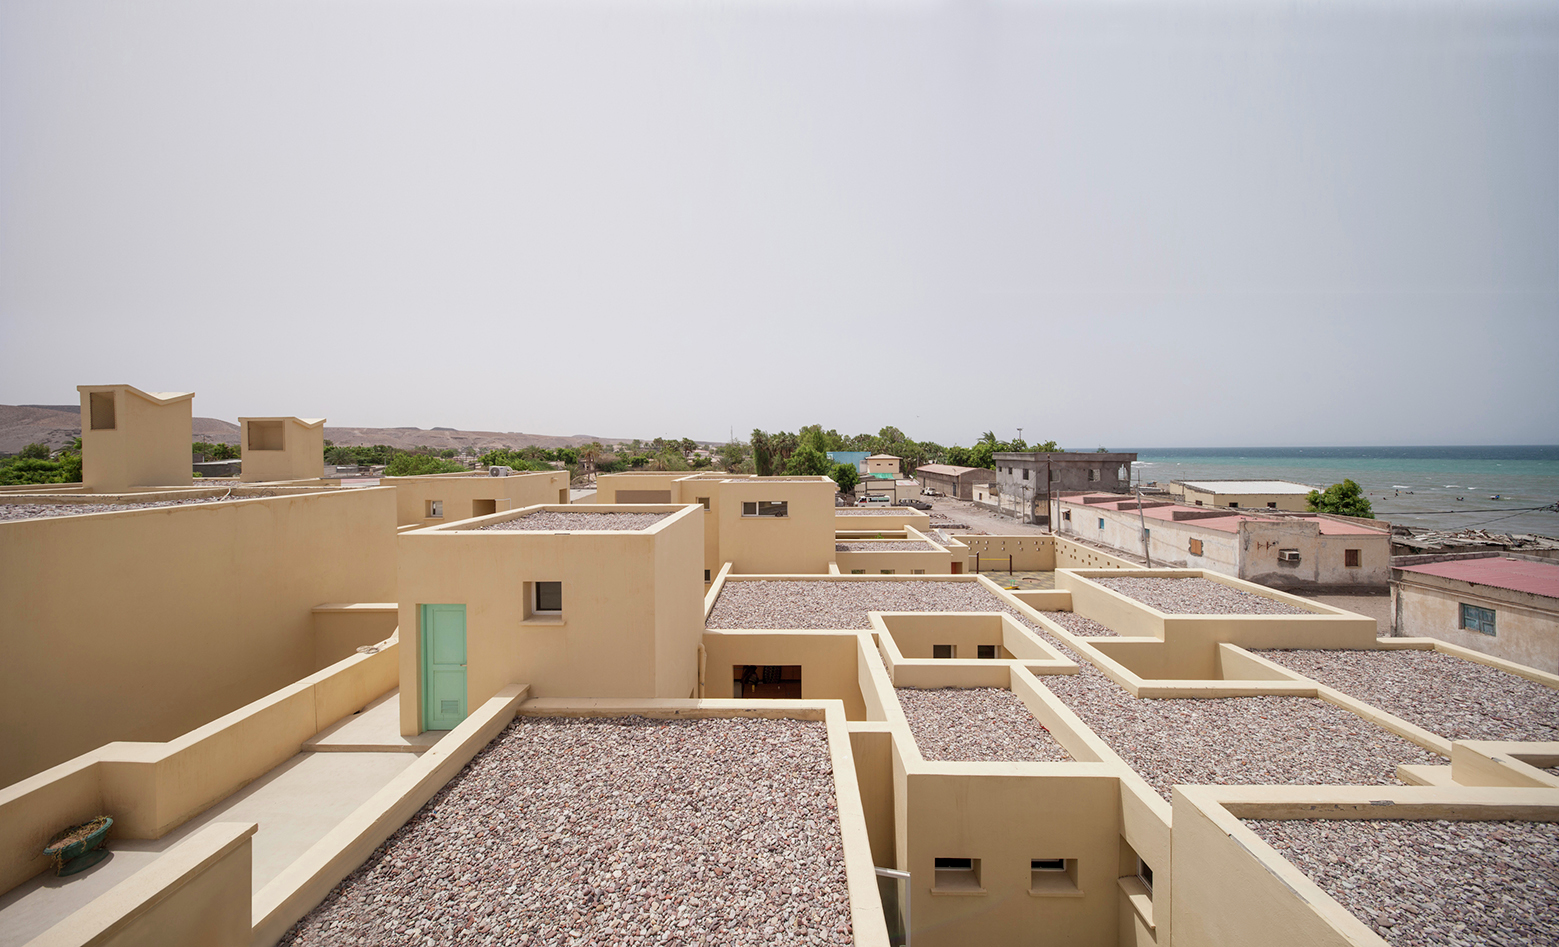 SOS_Village_Djibouti_-_Roofs_(9).jpg